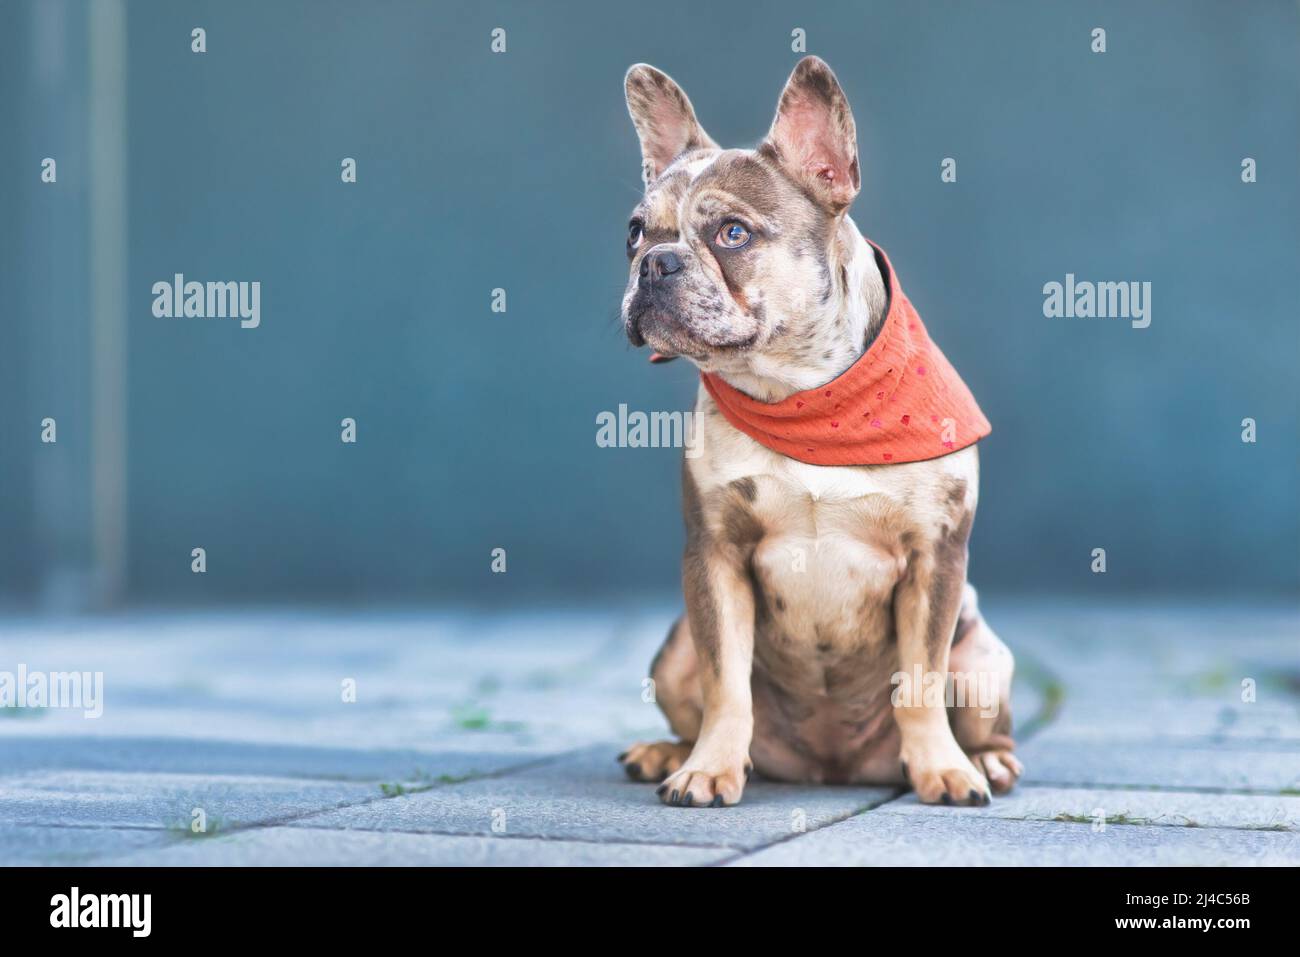 Sitting merle French Bulldog dog wearing red neckerchief Stock Photo